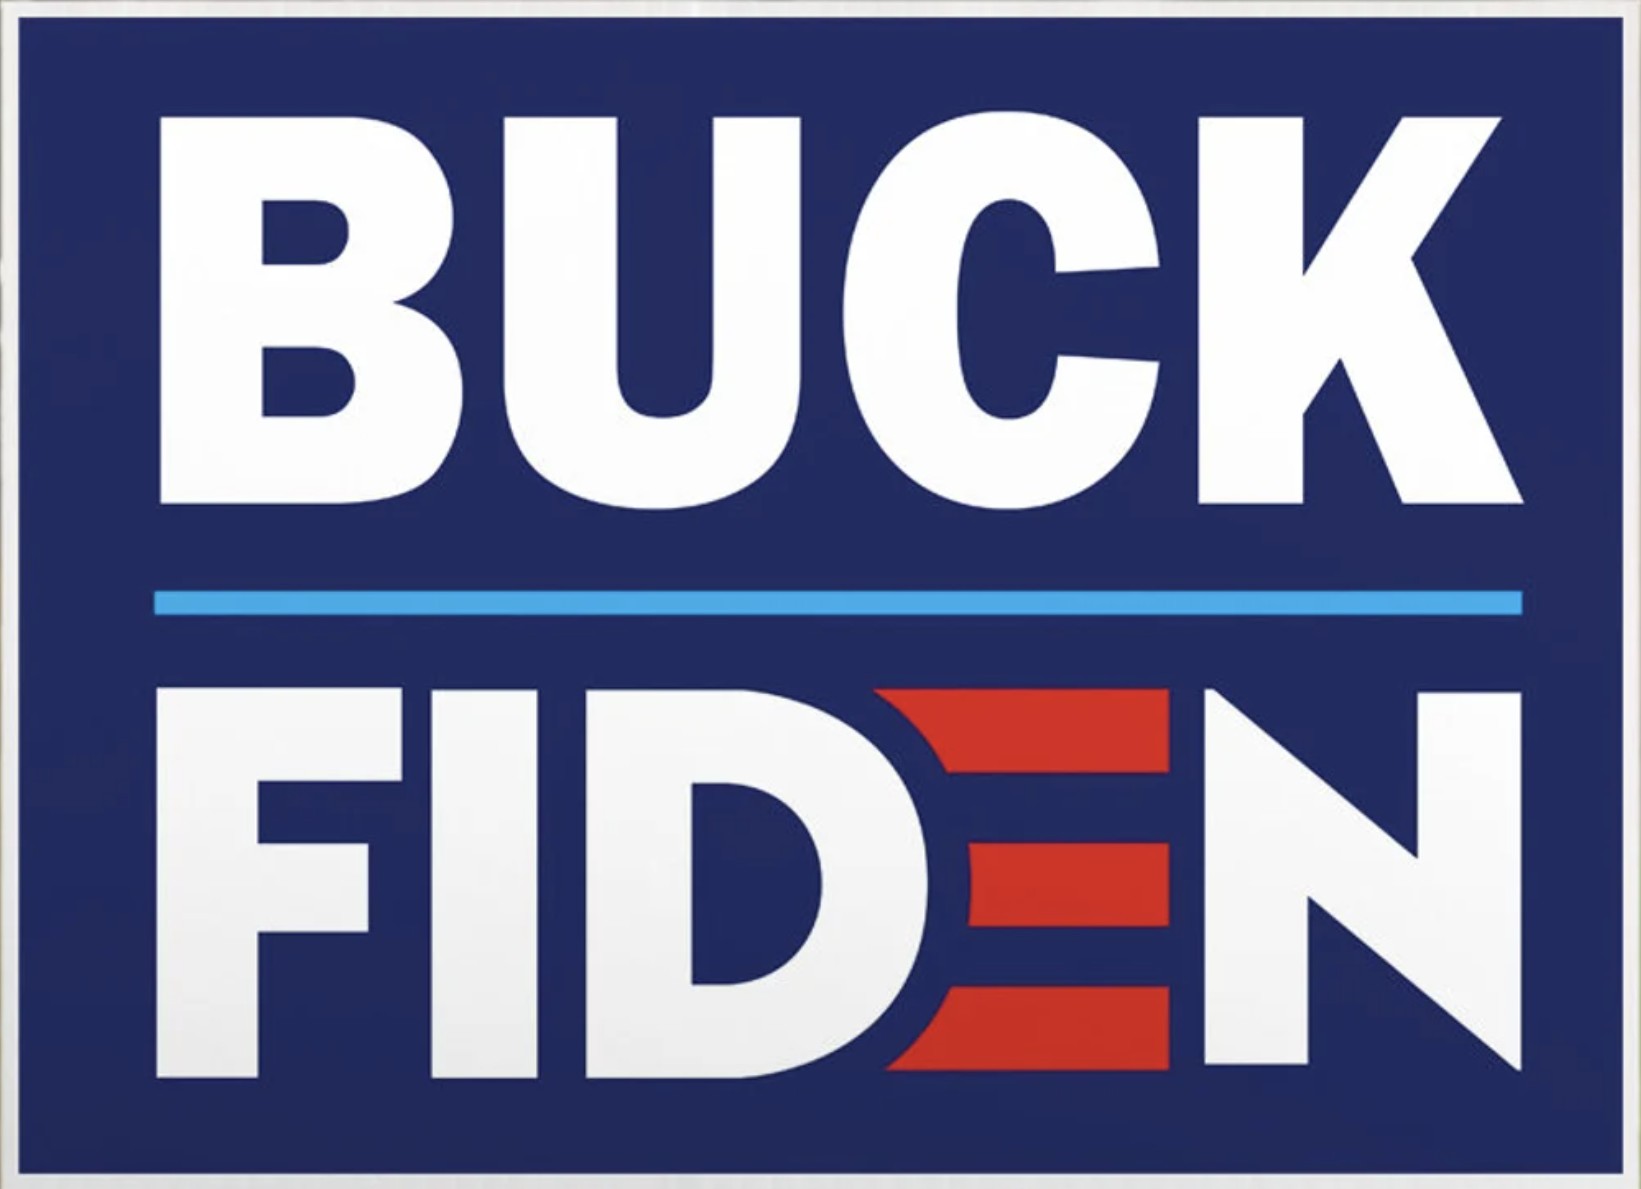 Buck Fiden Everyone is thinking it Yard Signs